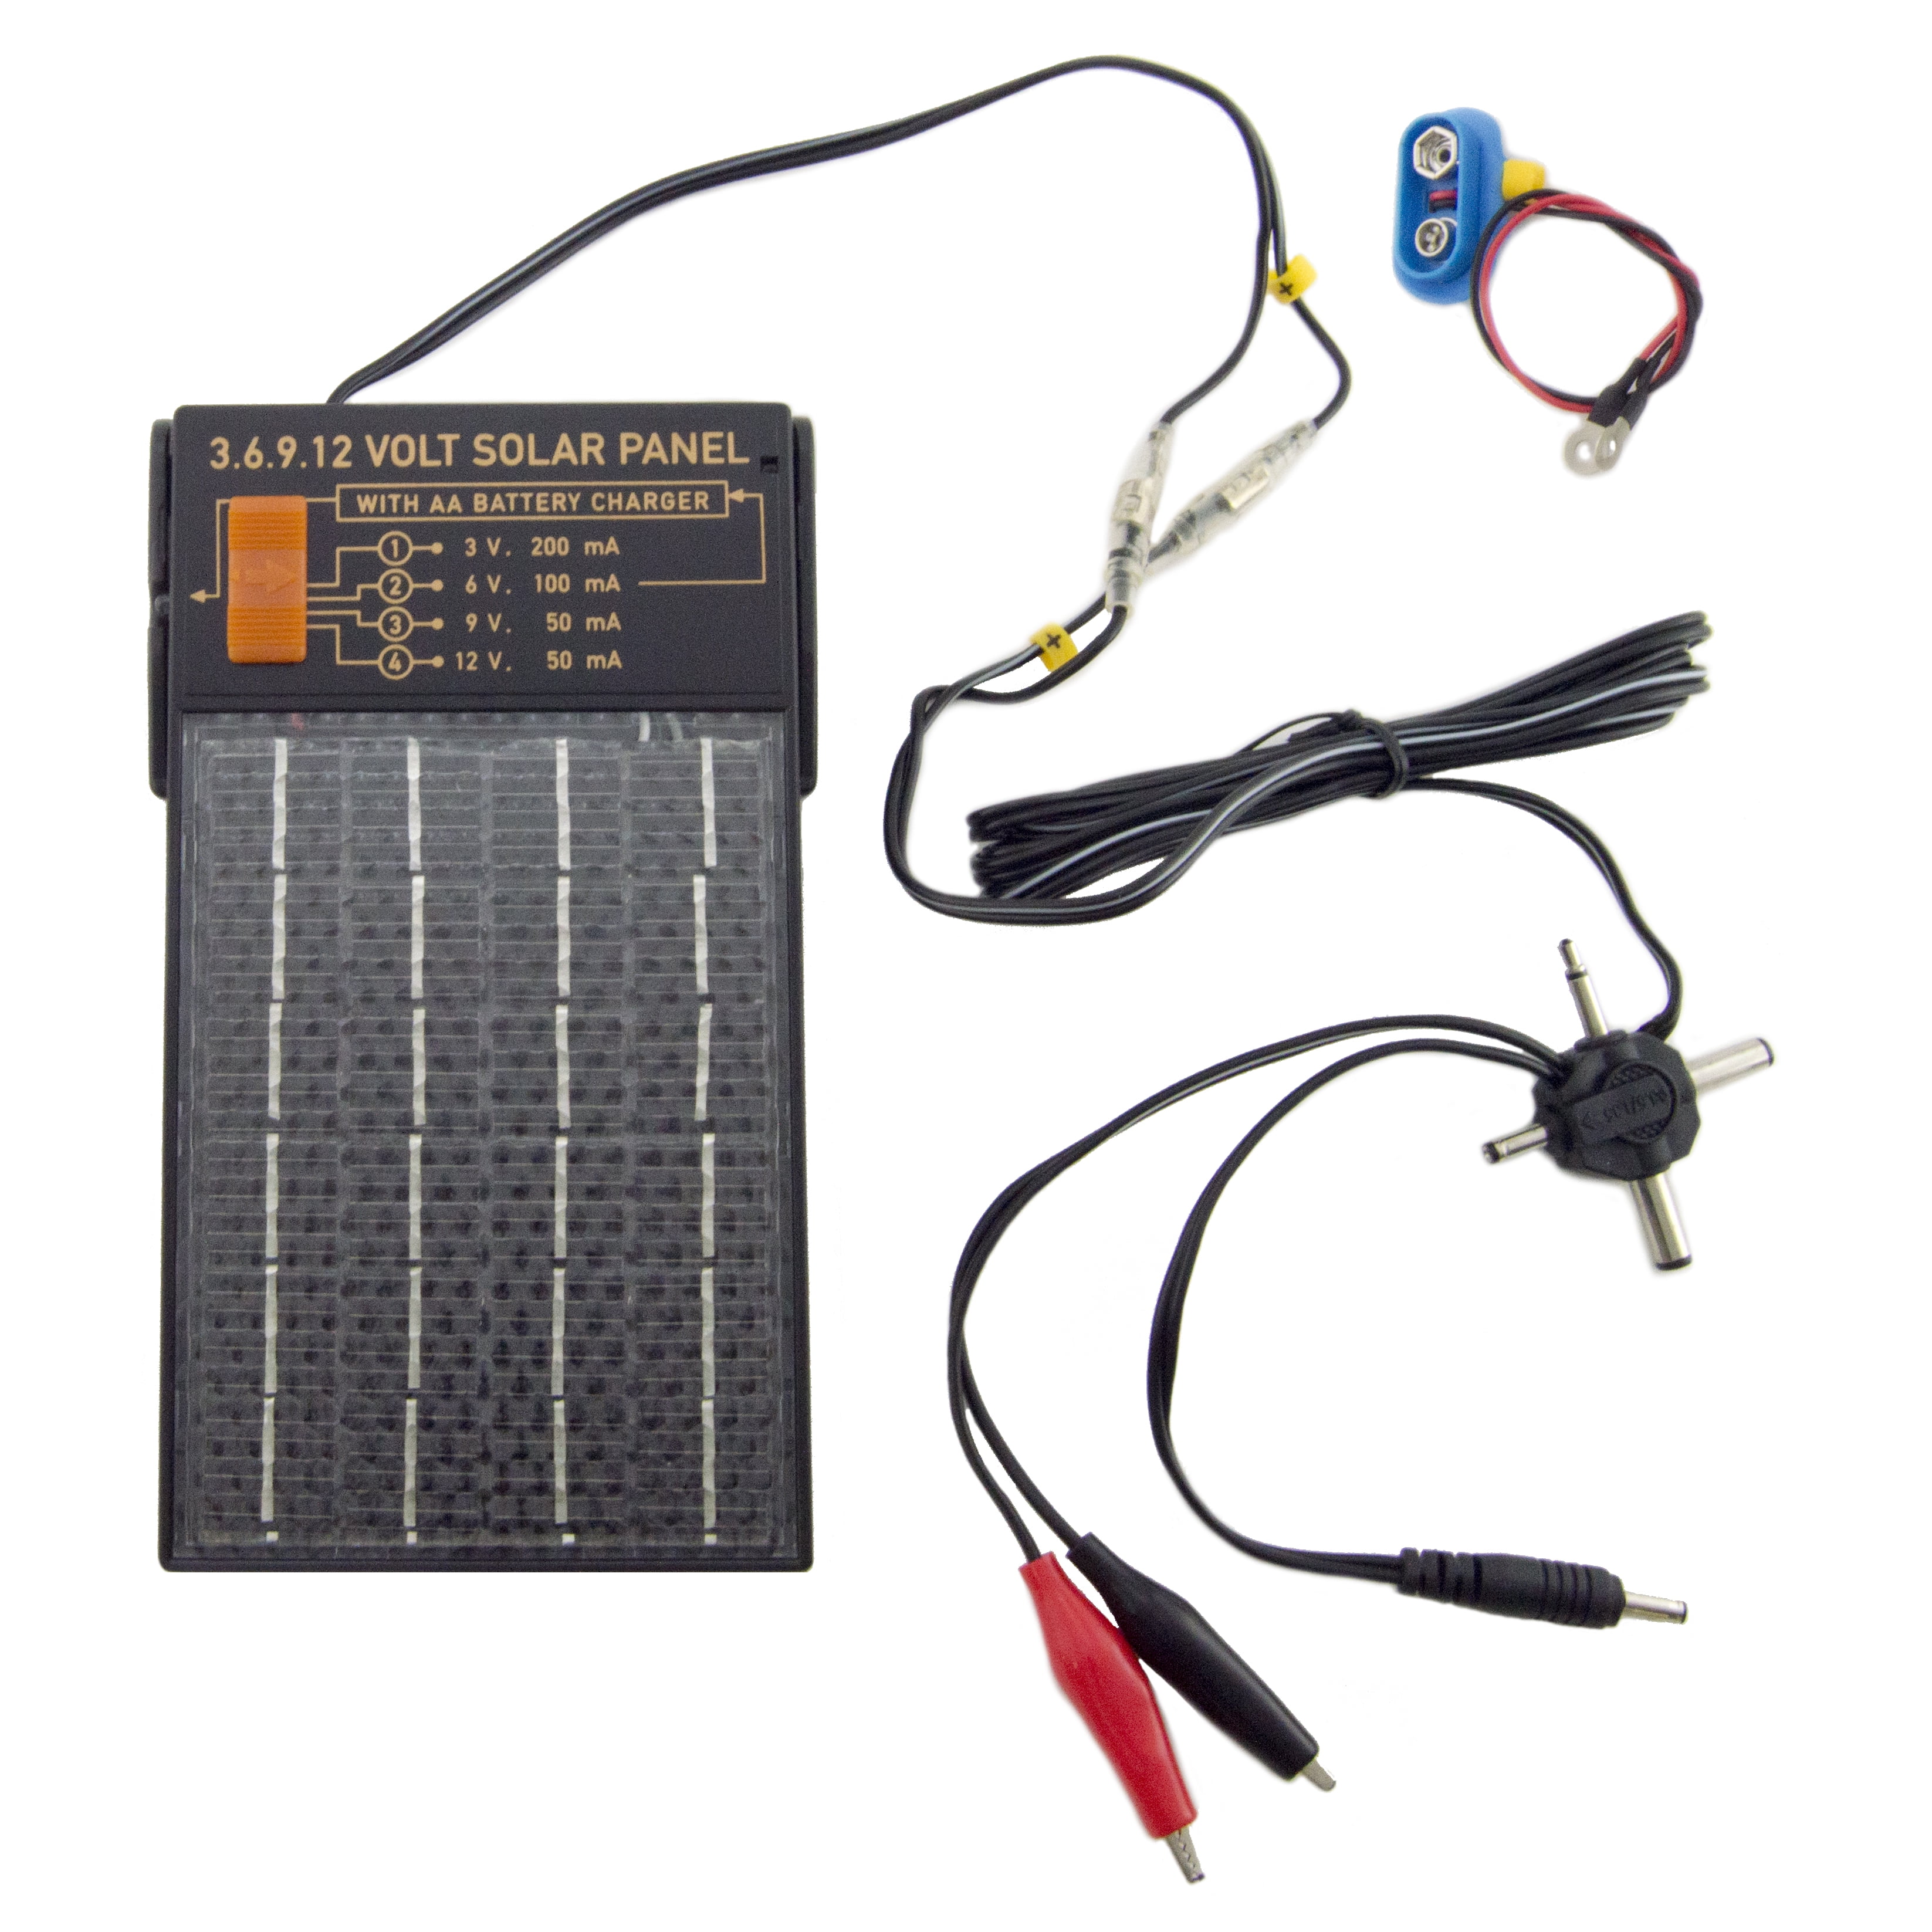 Solar Charger DS 516 квадратный. Солнечная батарея 6 вольт. Sony Solar Battery Charger. Volt устройство. 12v 9v